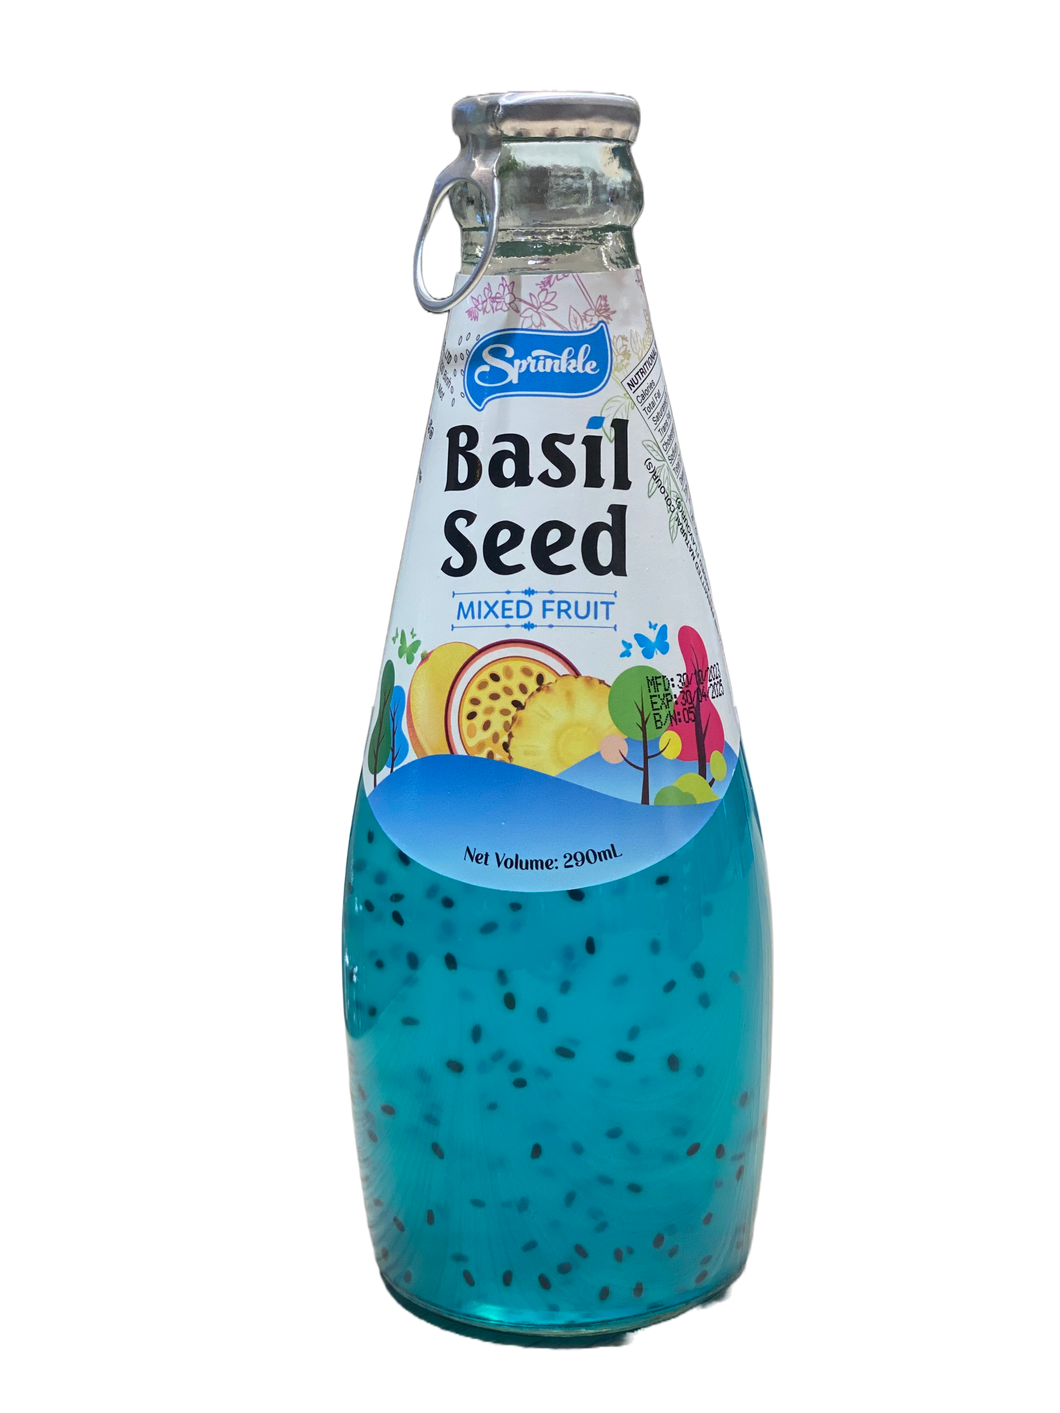 Mixed Fruit Flavored Basil Seed Drink 290ml- Sprinkle